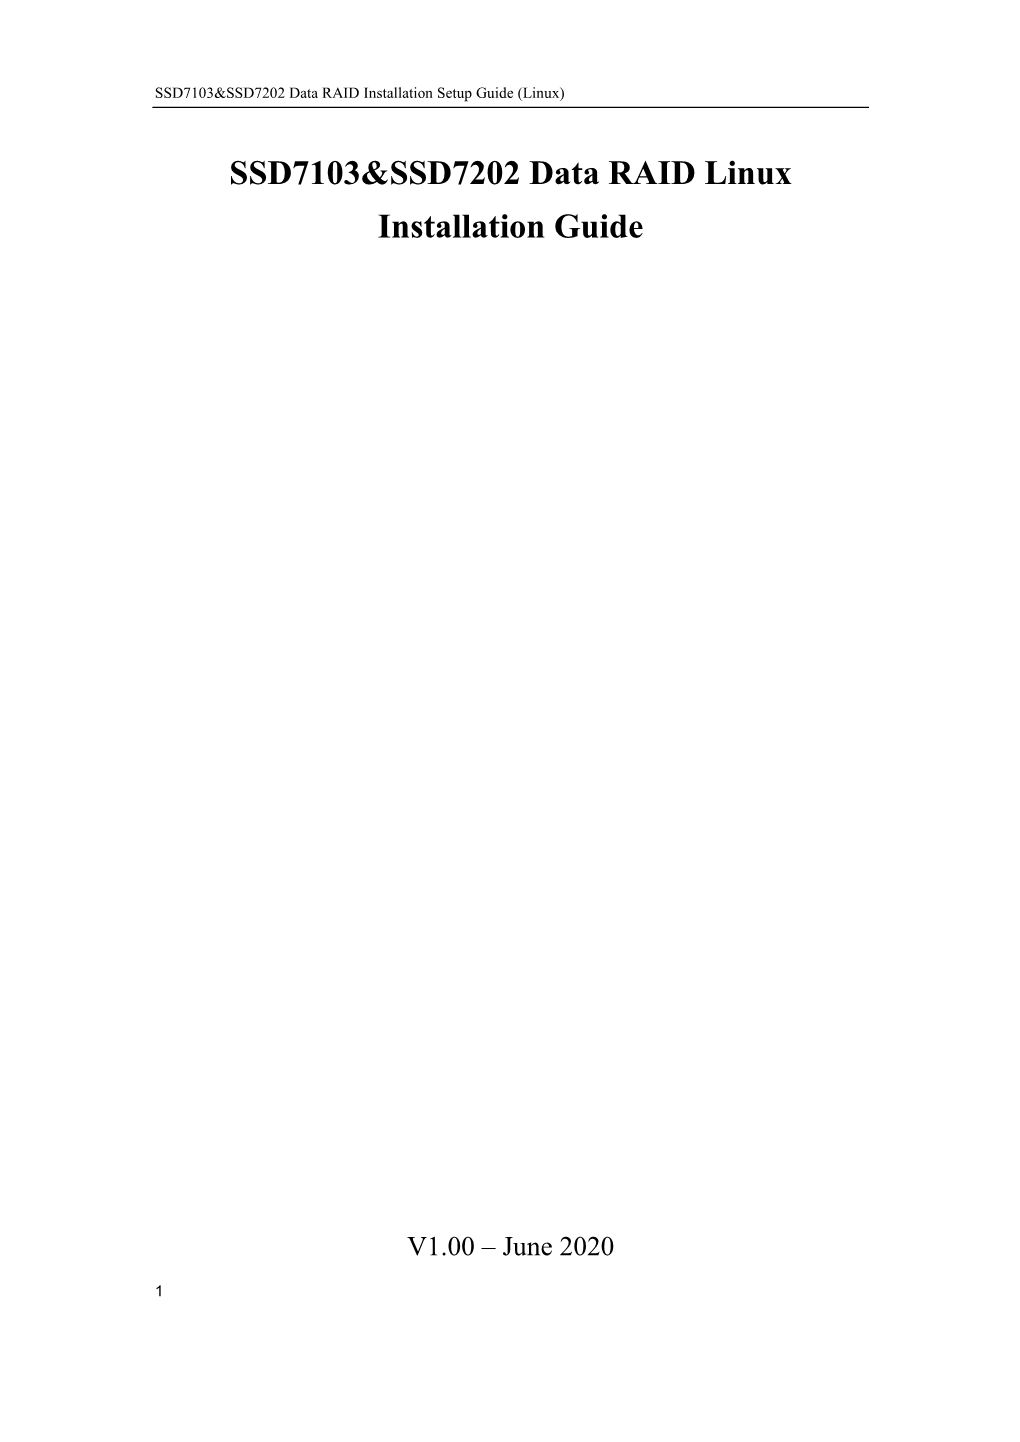 SSD7103&SSD7202 Data RAID Linux Installation Guide